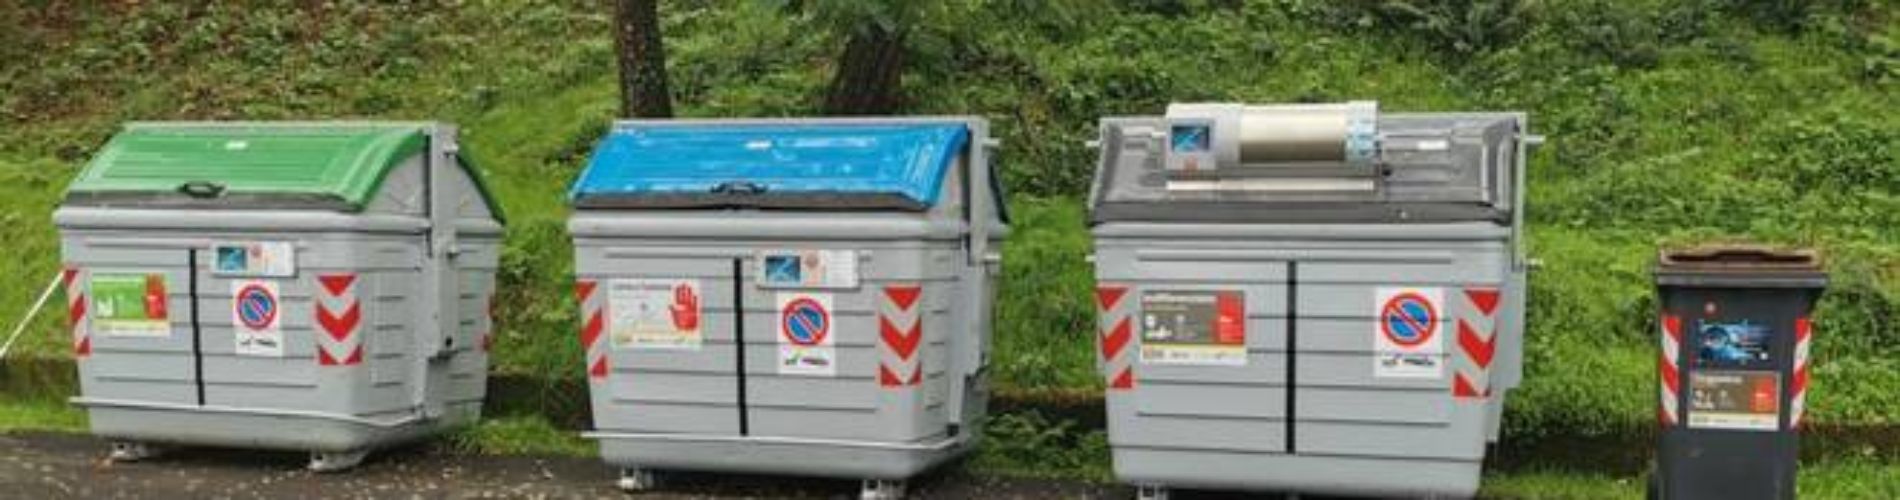 Immagine di TARI - Tassa sui rifiuti 